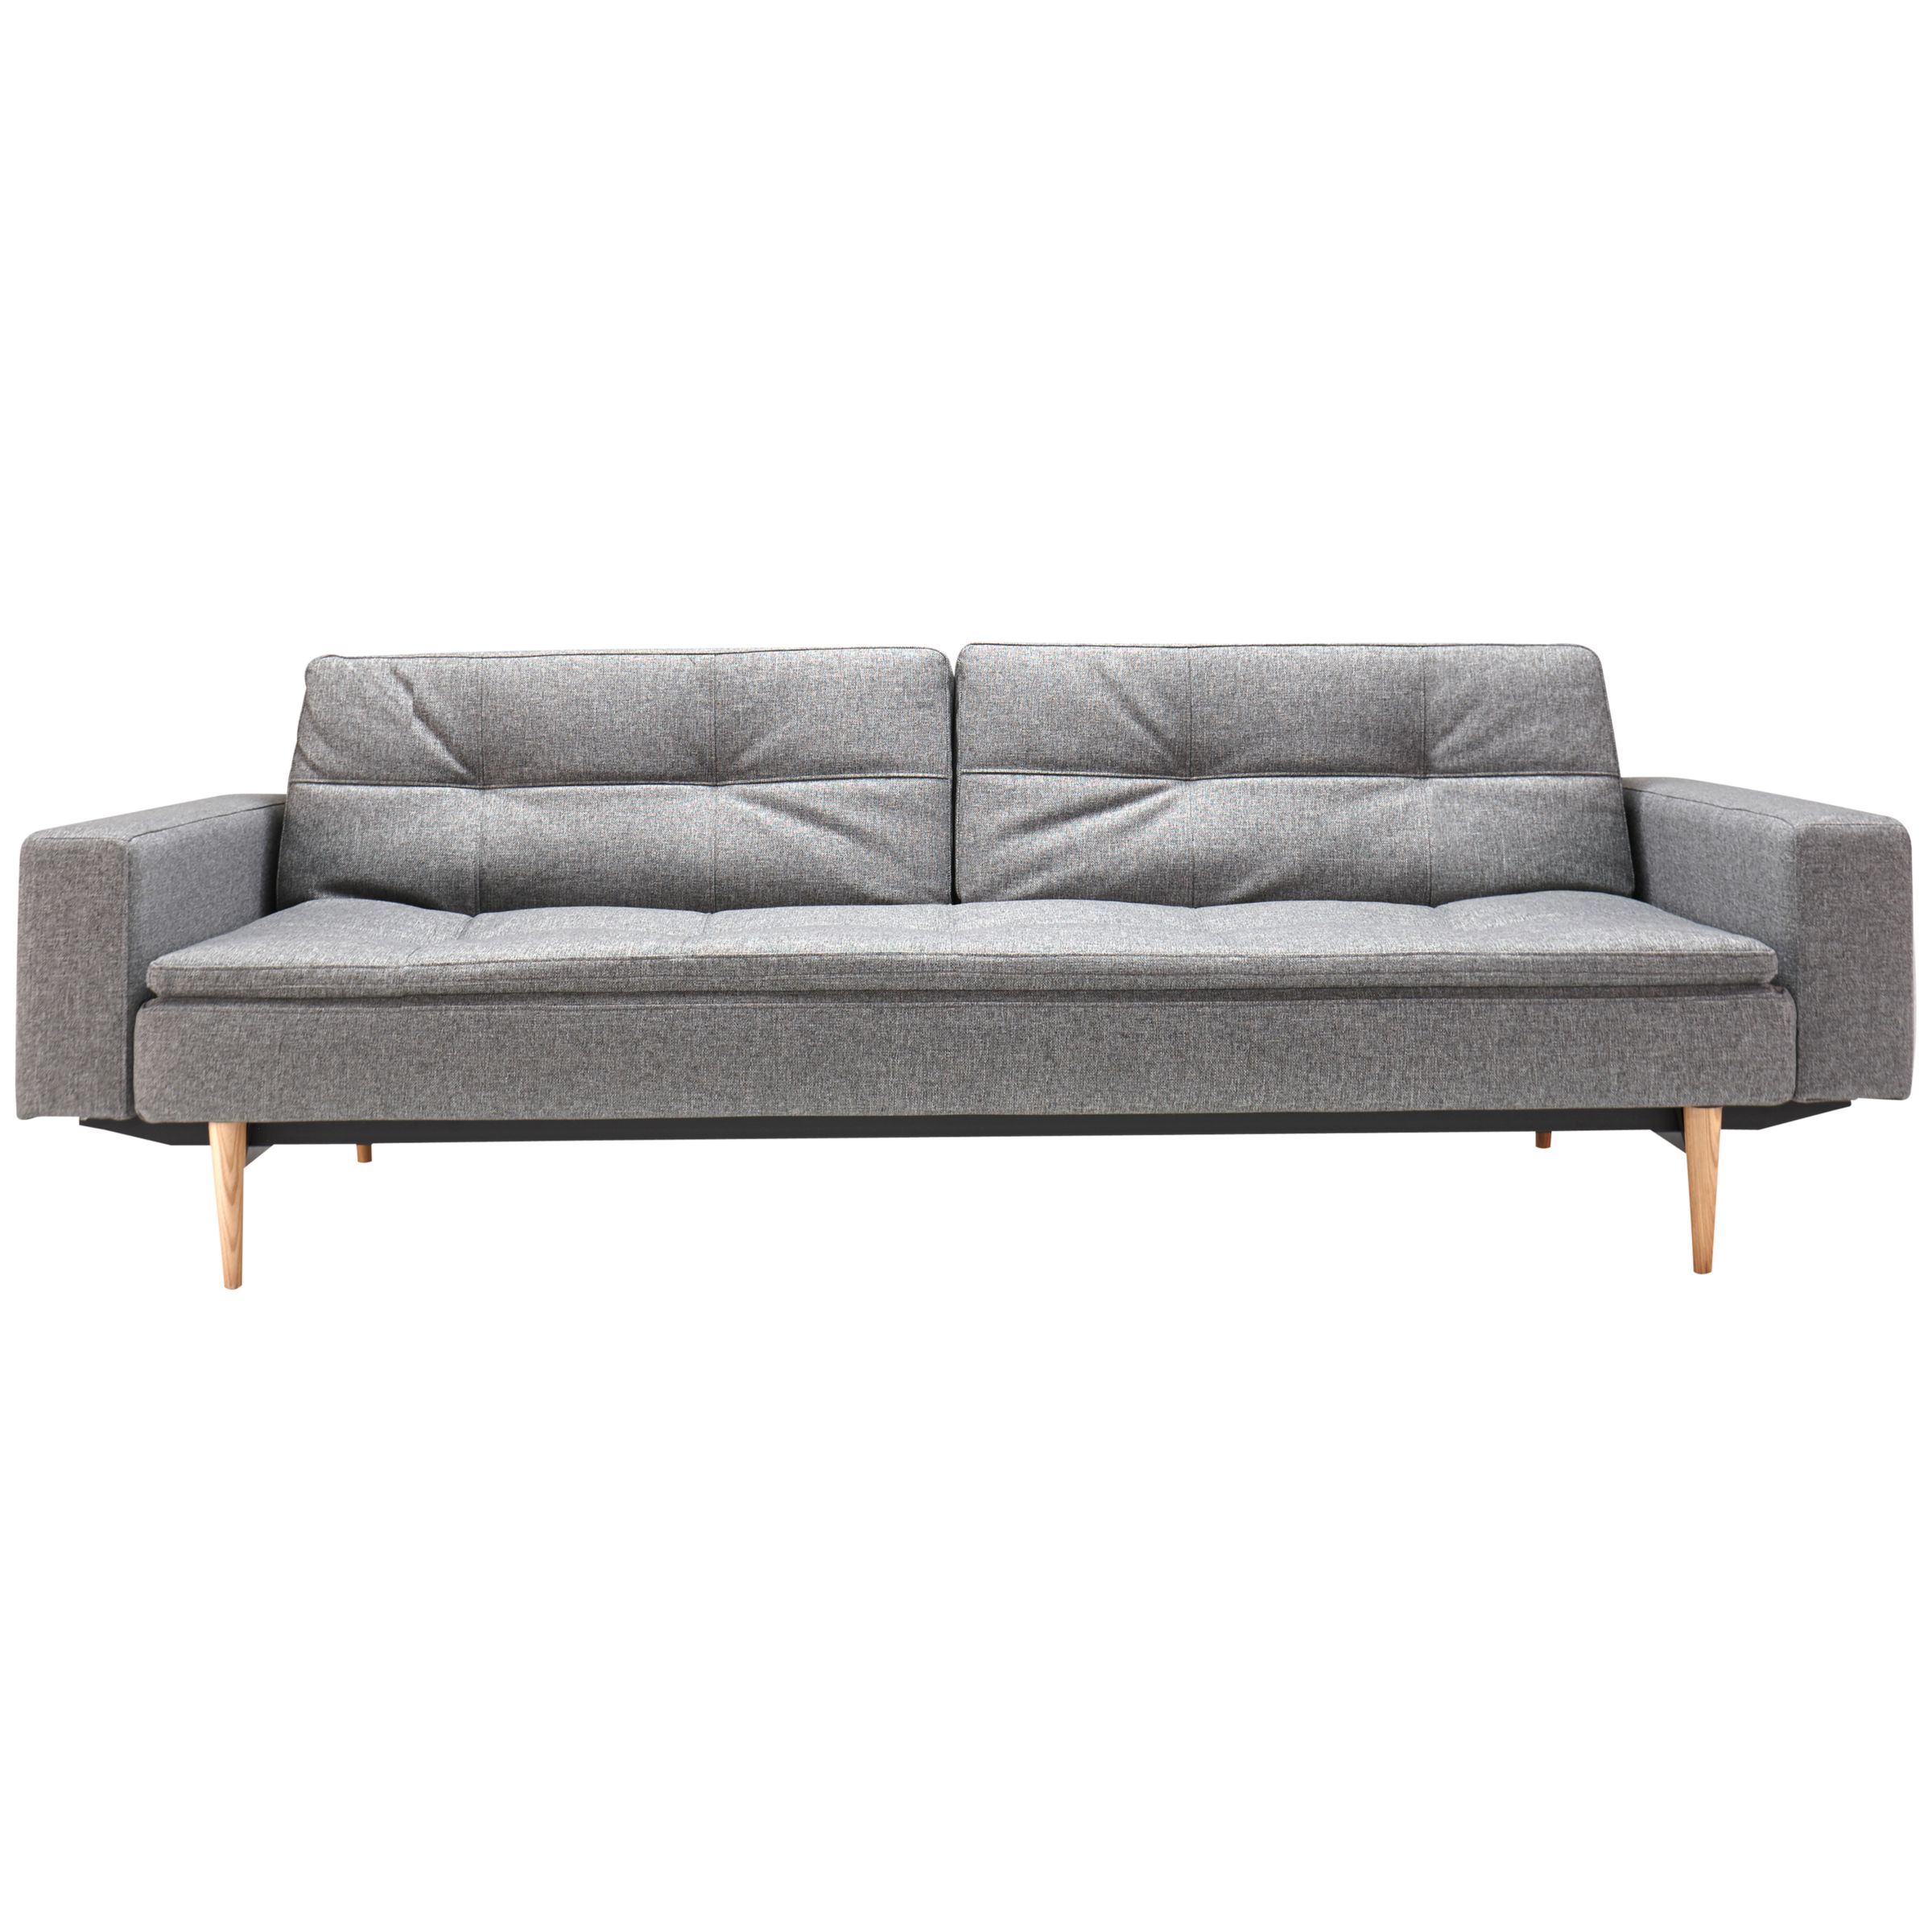 Innovation Living Dublexo Sofa Bed with Arms, Light Grey